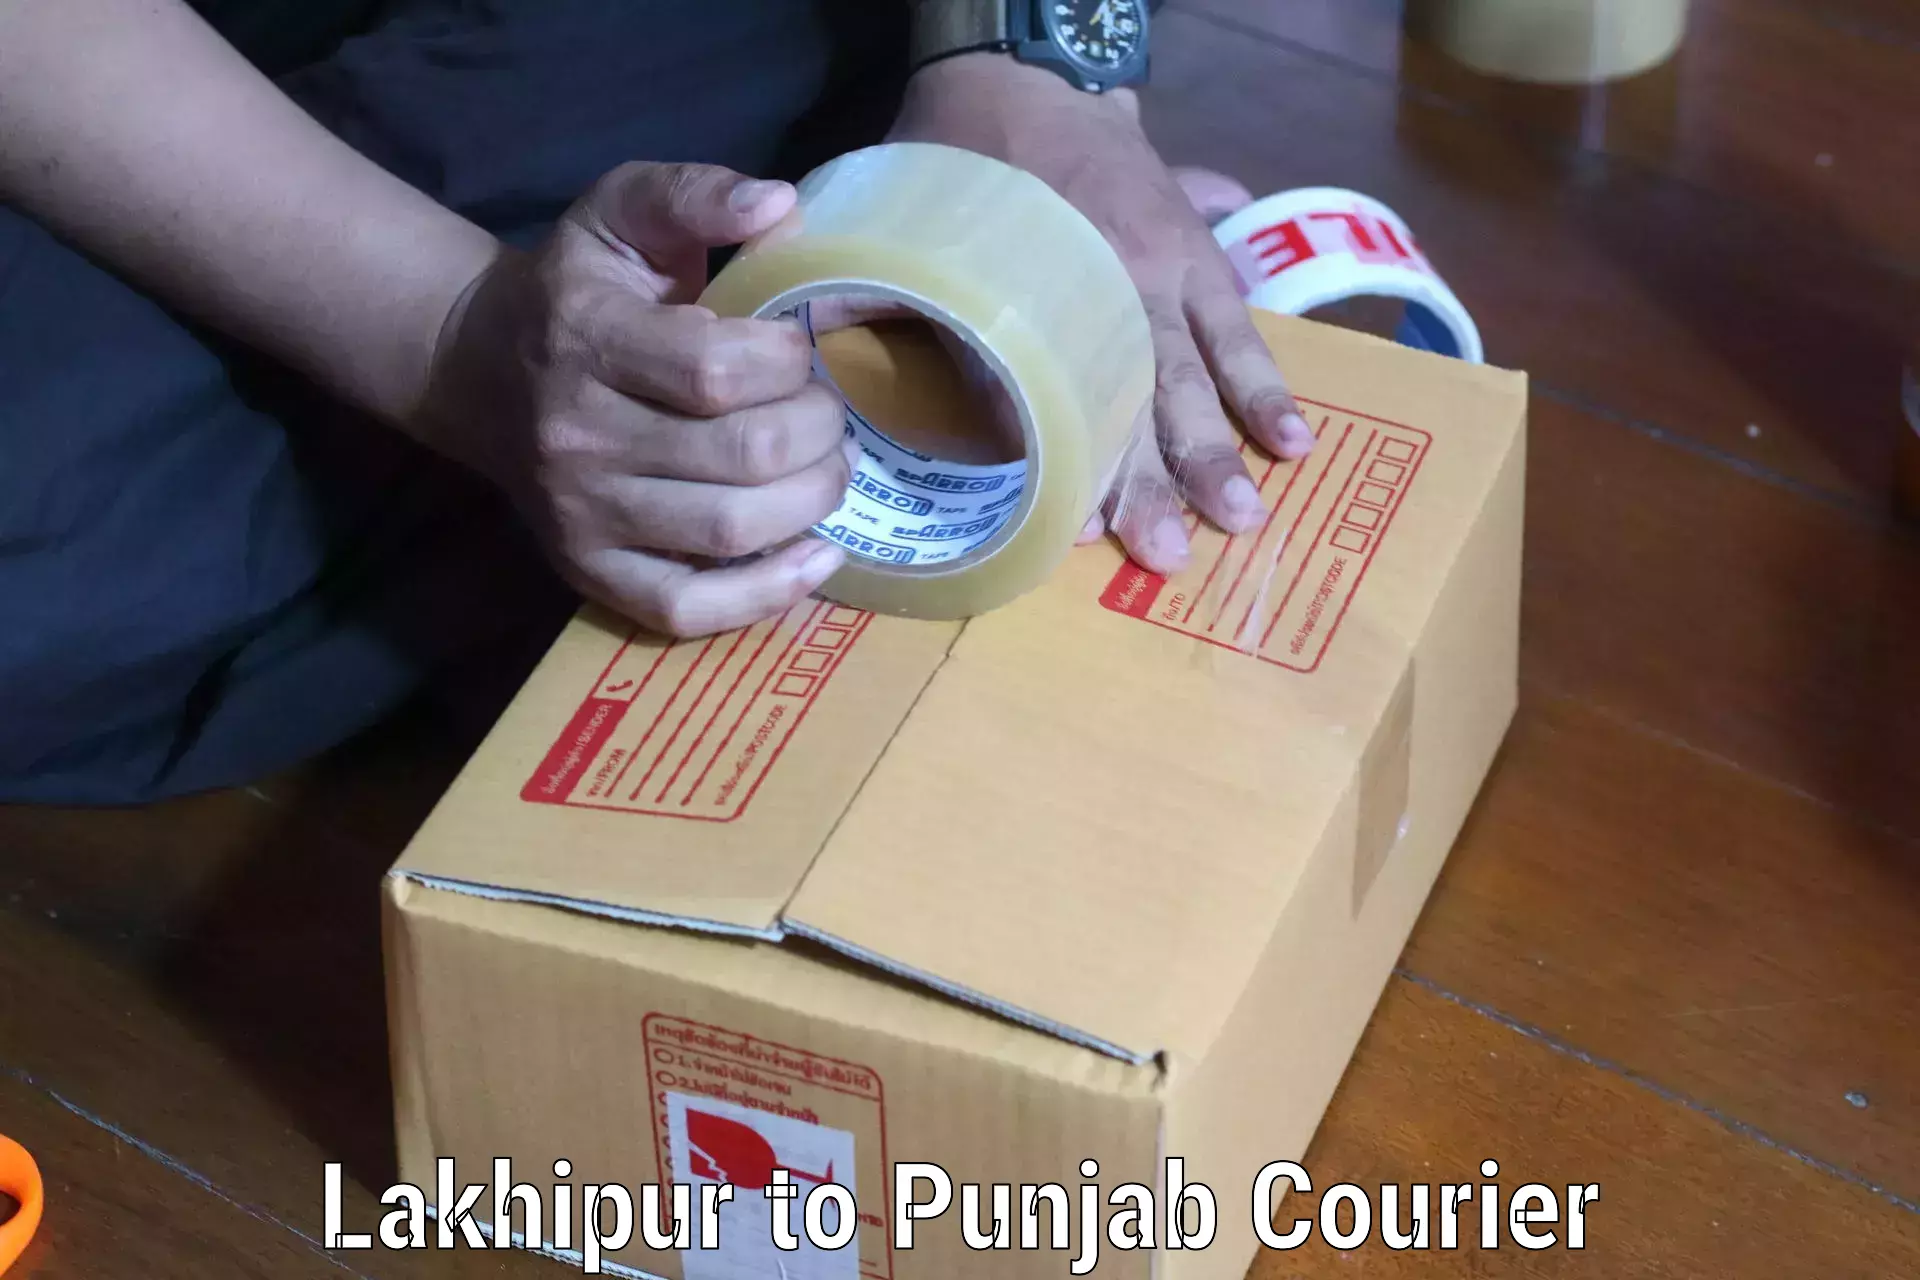 Parcel handling and care Lakhipur to Dinanagar